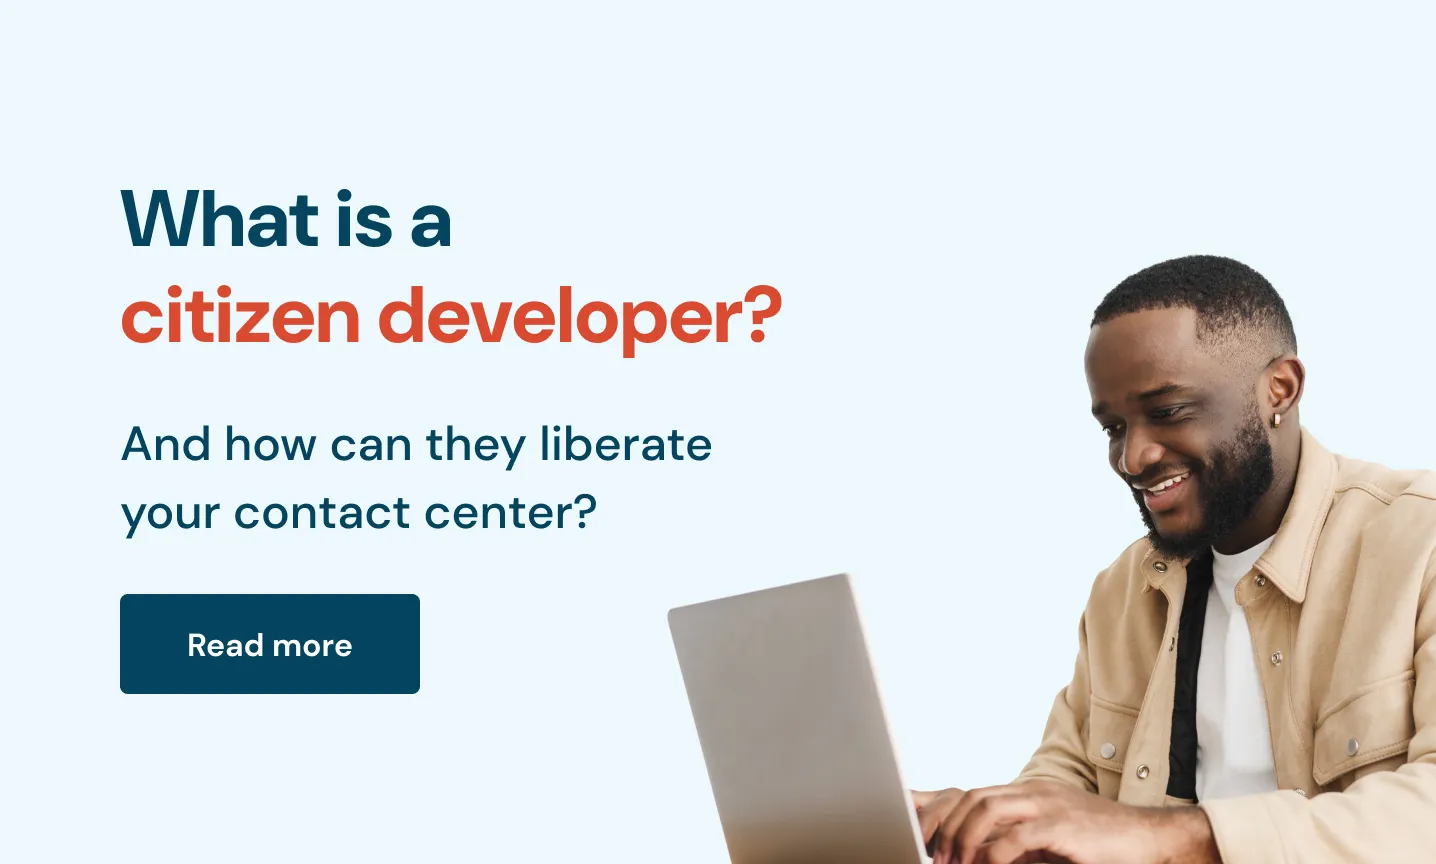 What is a citizen developer?